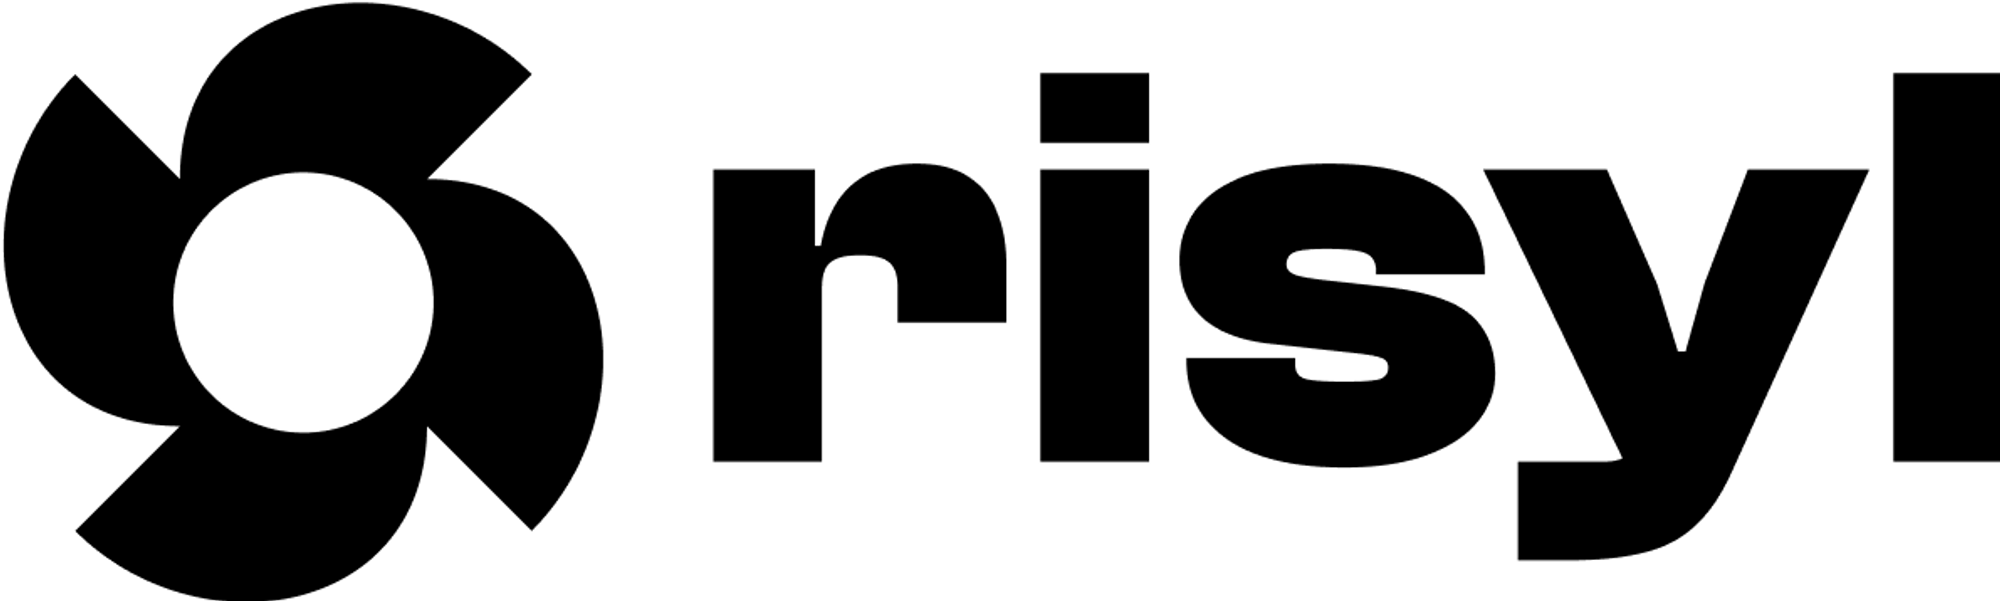 Modern logo design for risyl.com